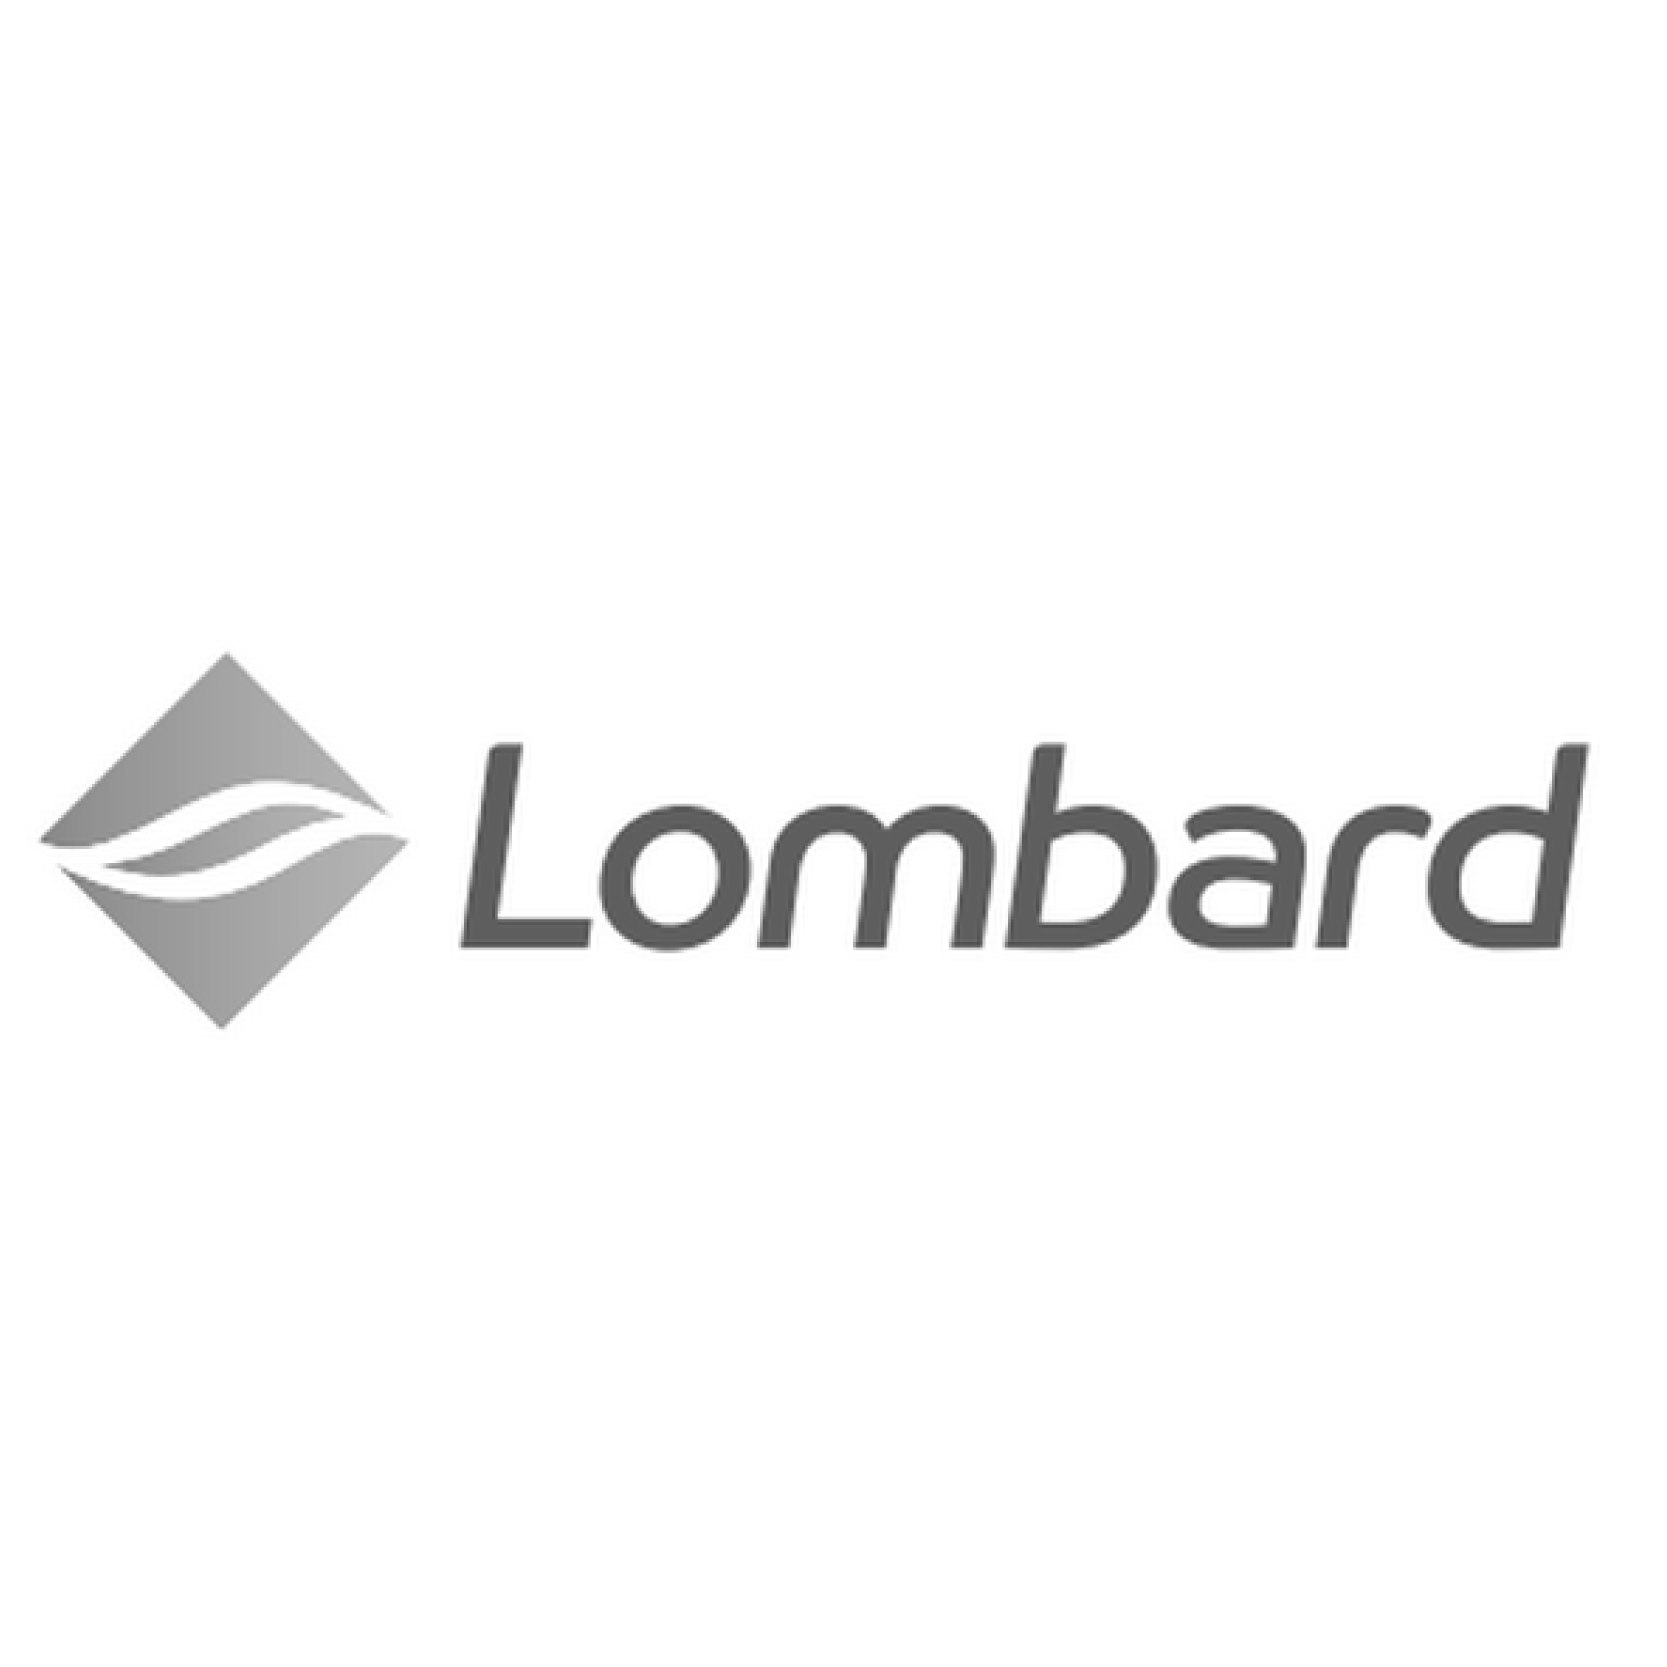 Lombard-01